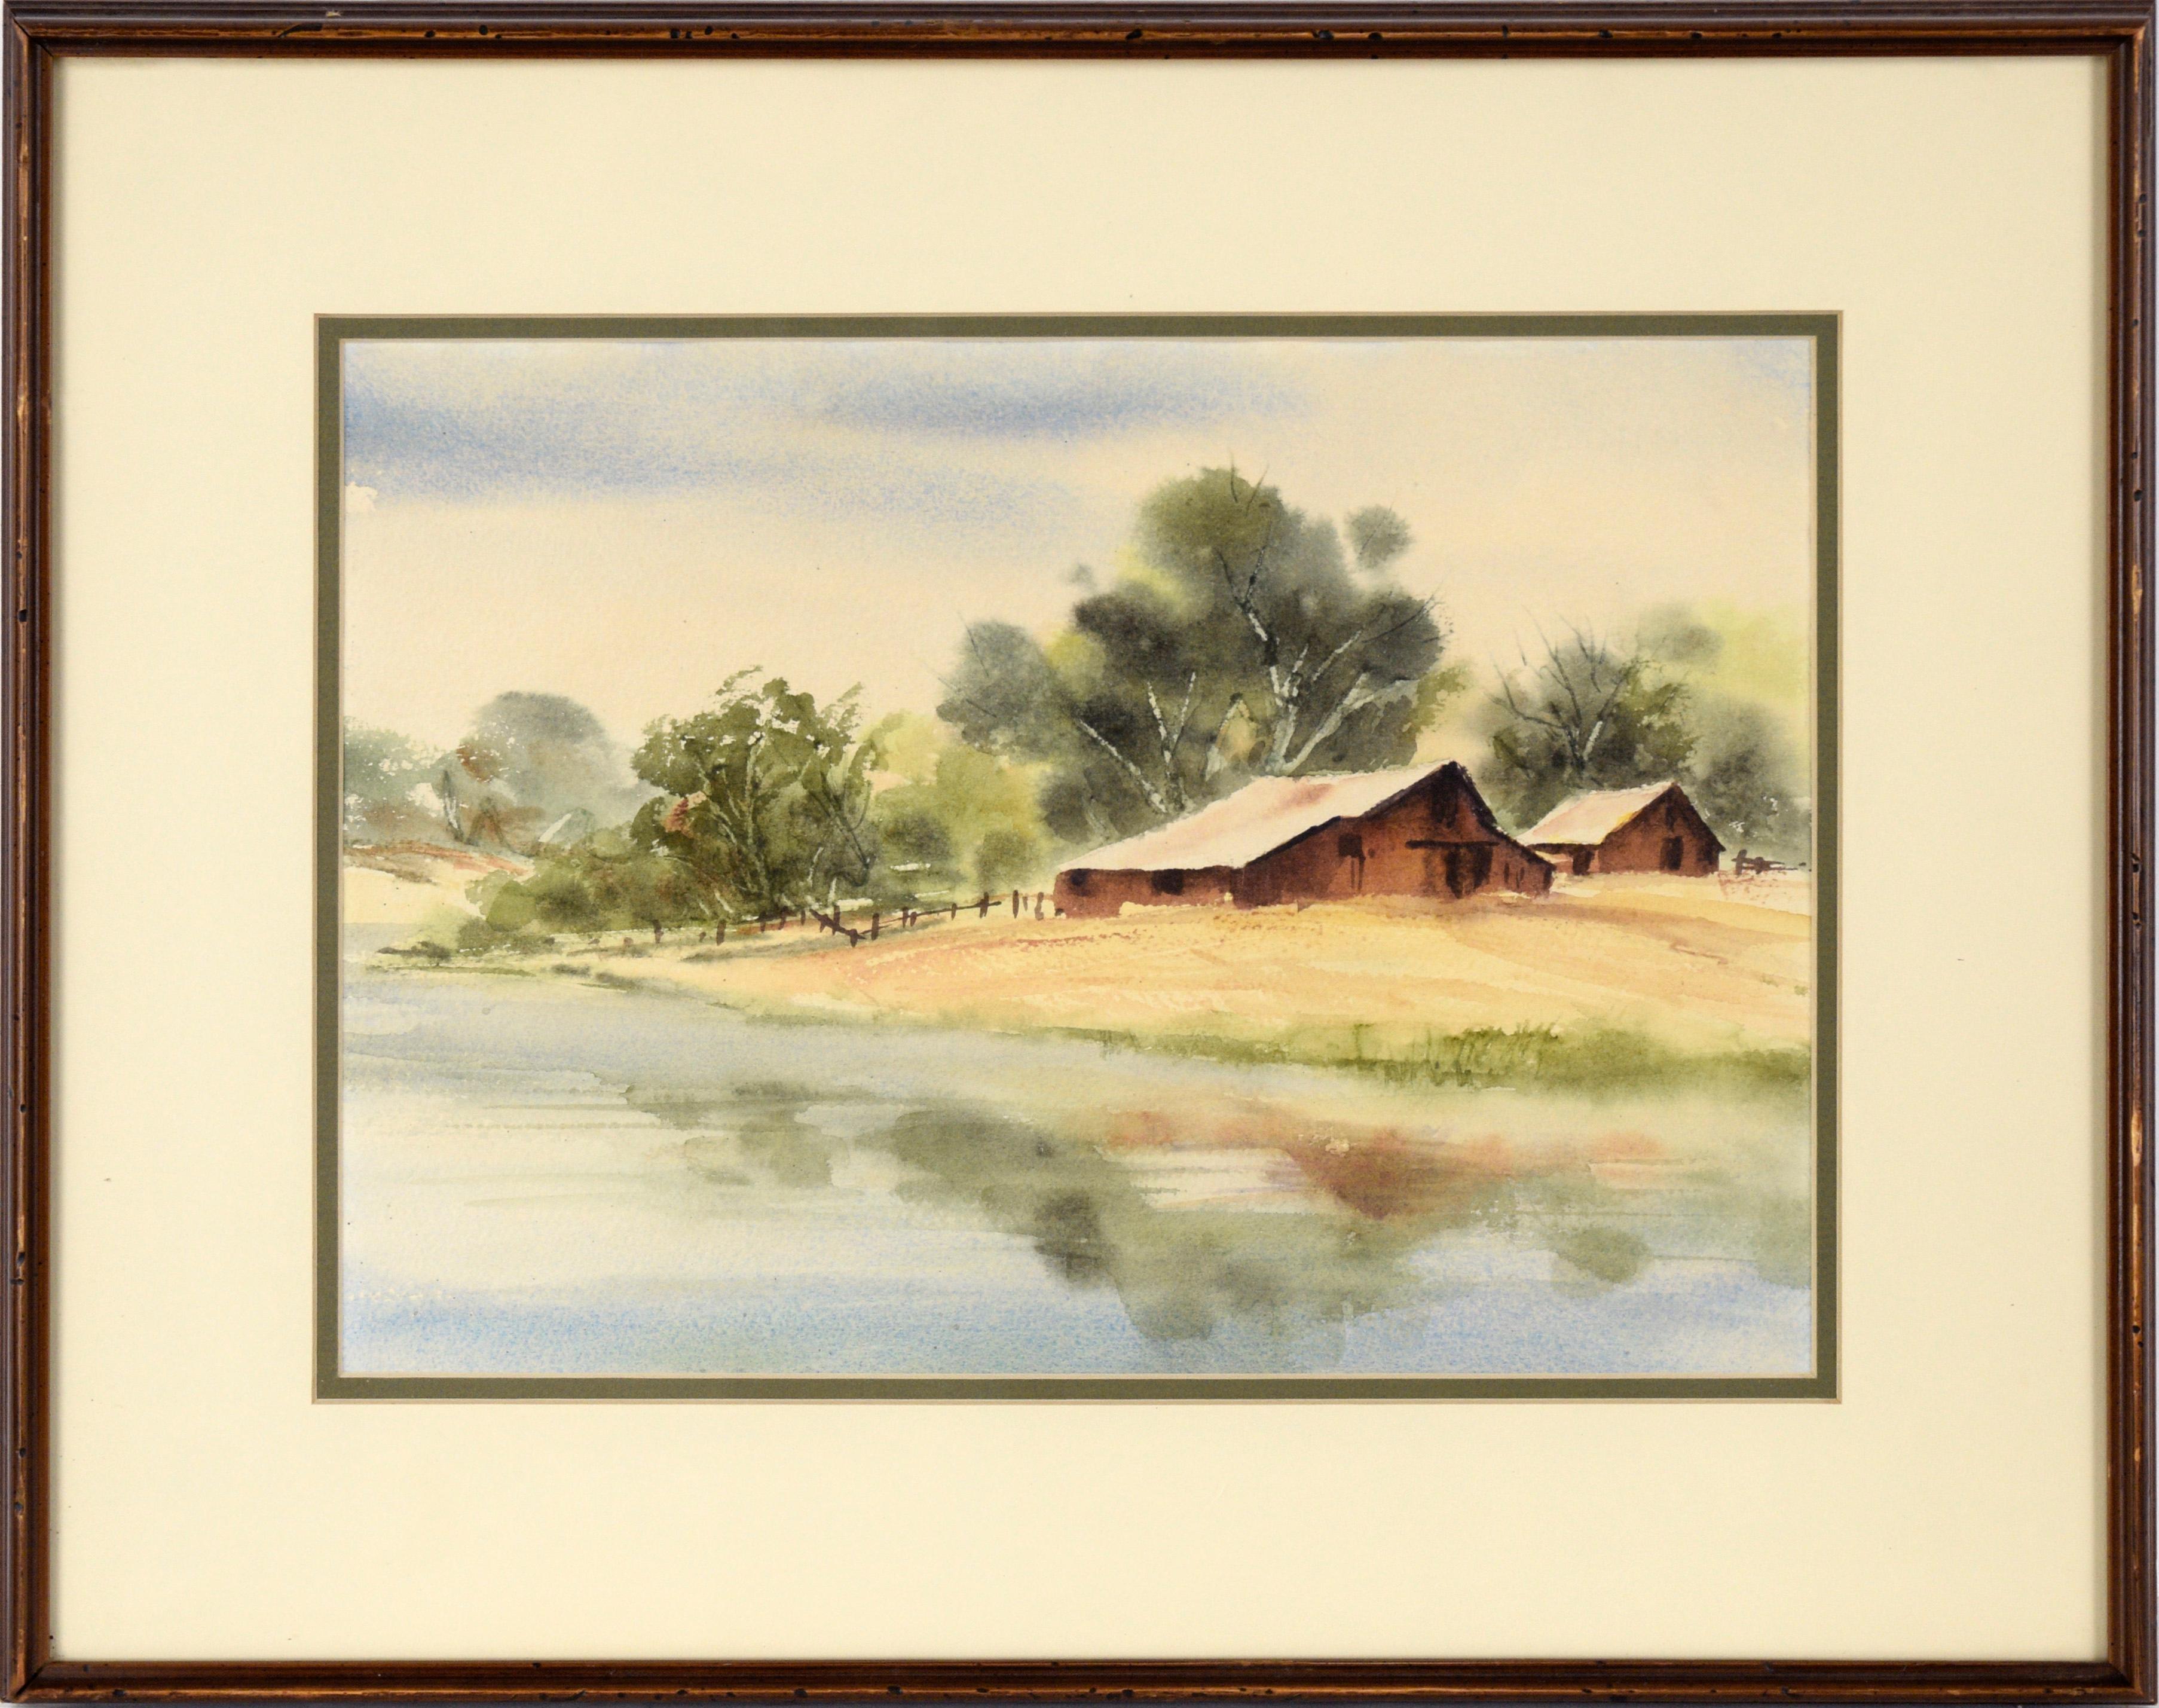 "Shenandoah Valley" - Rural California Landscape in Watercolor on Paper